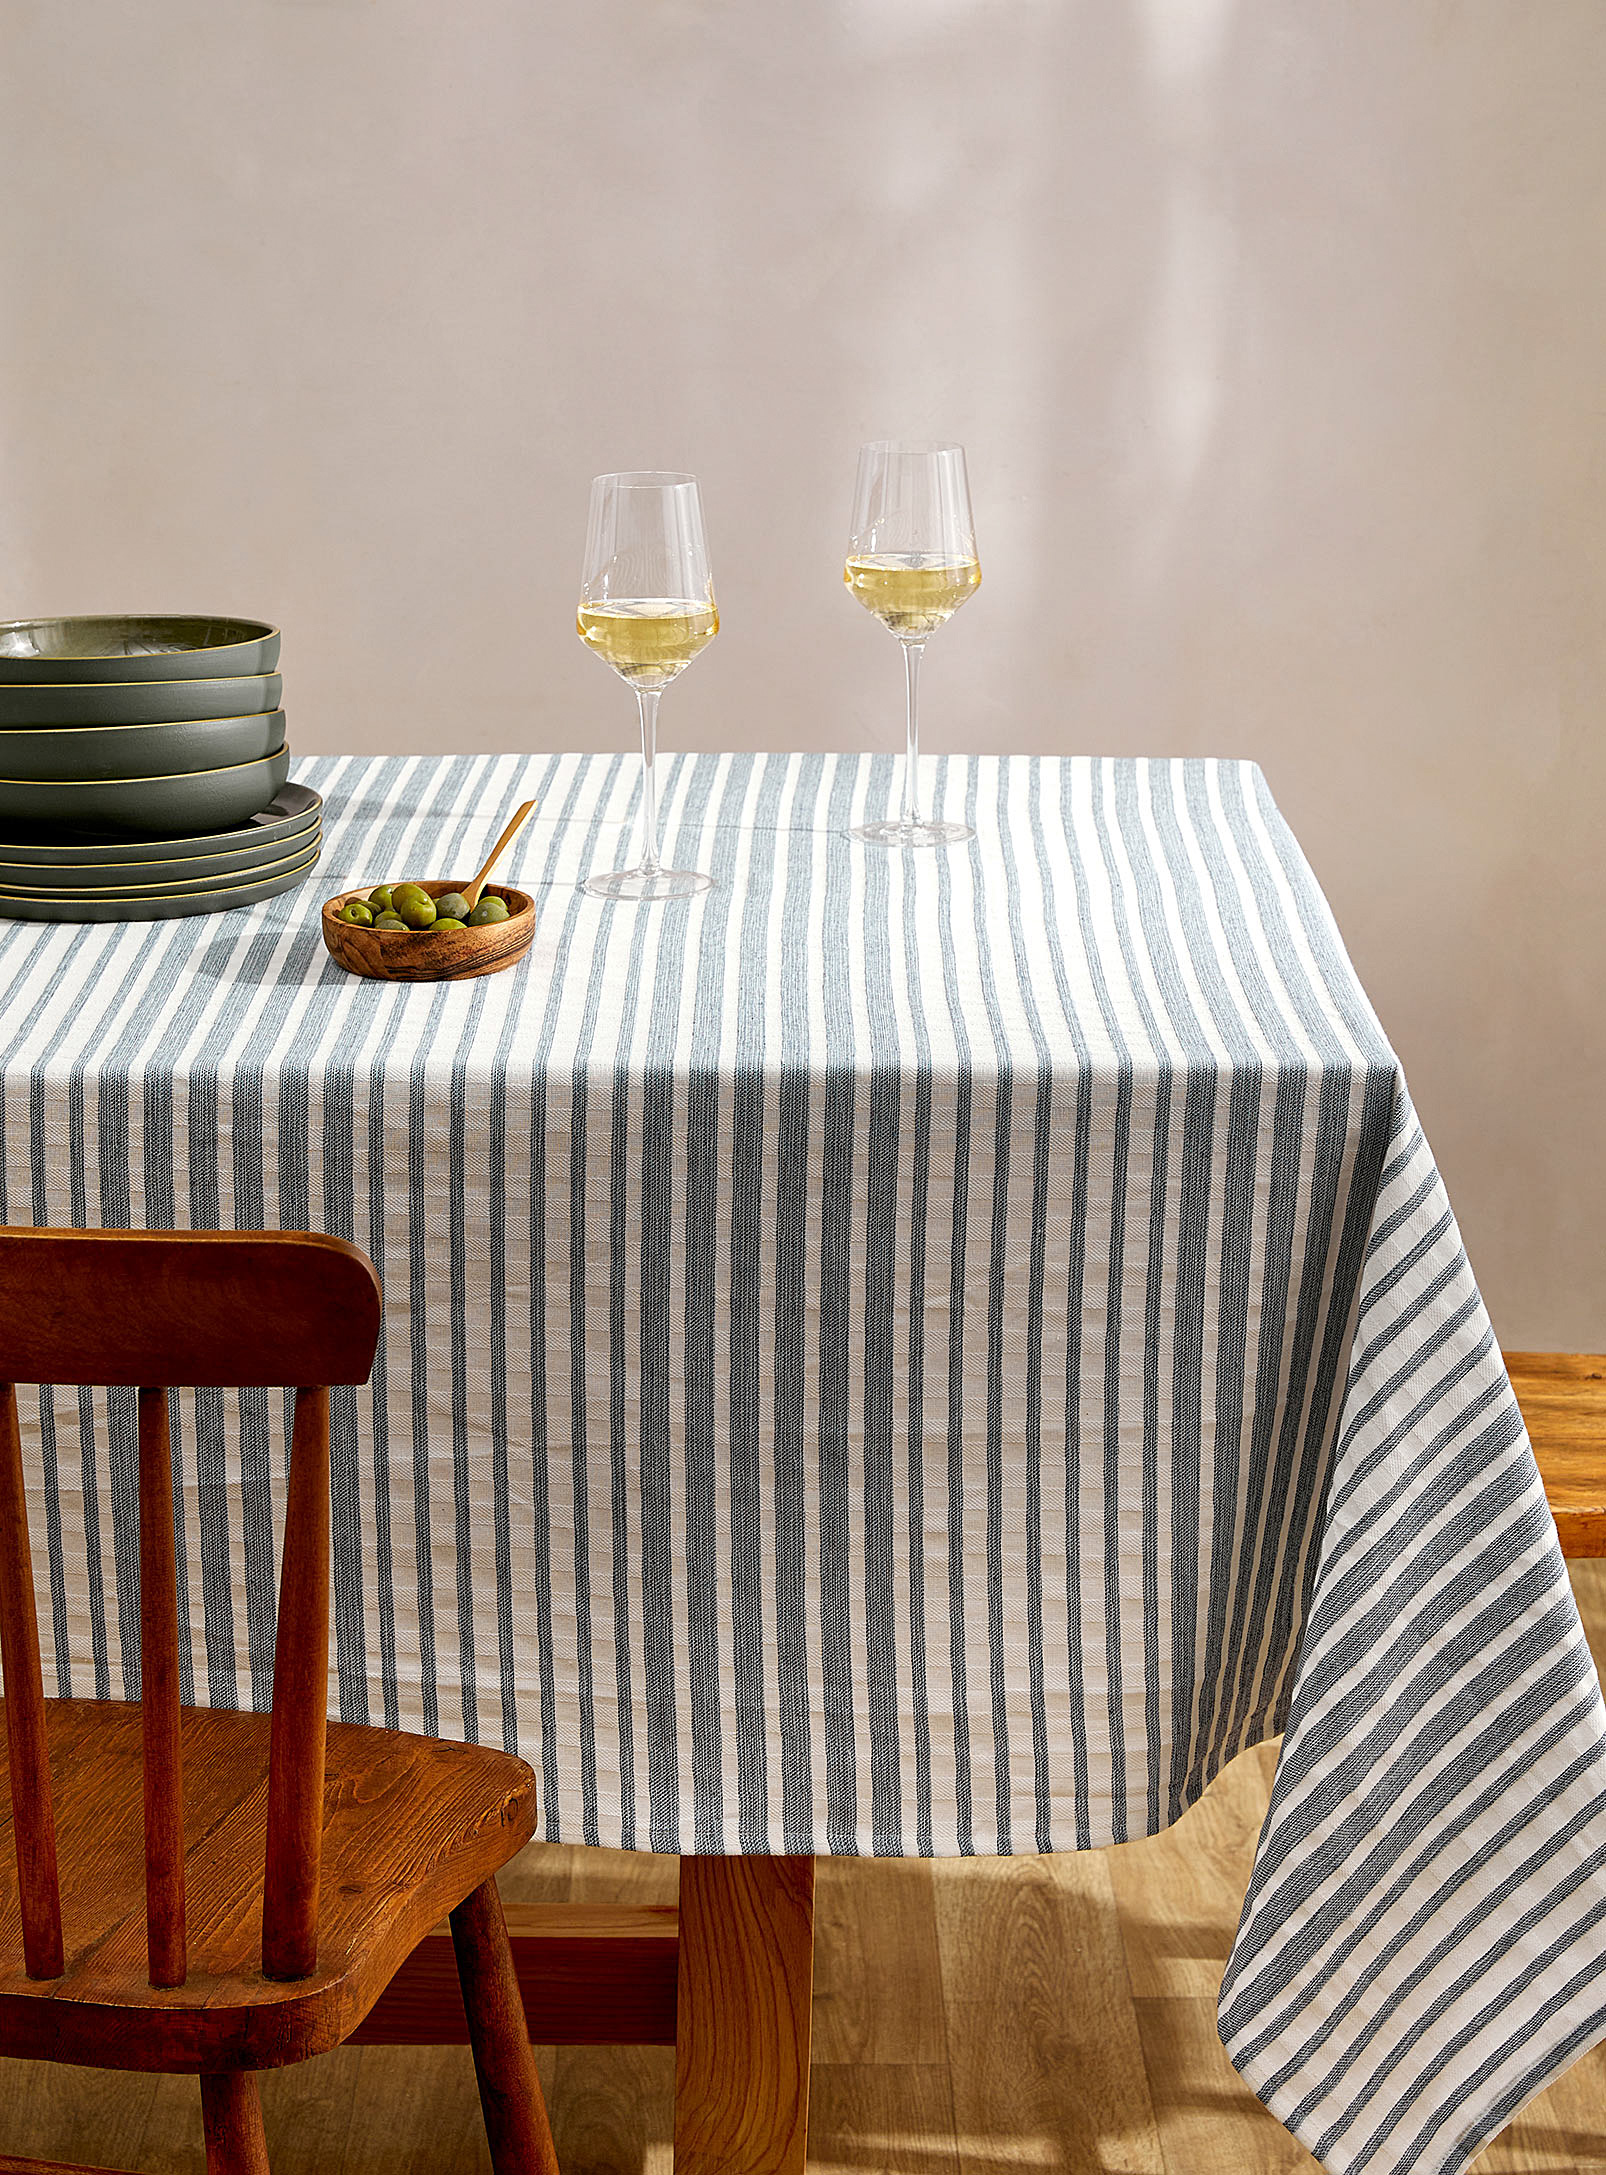 Simons Maison - Ocean stripes recycled cotton tablecloth